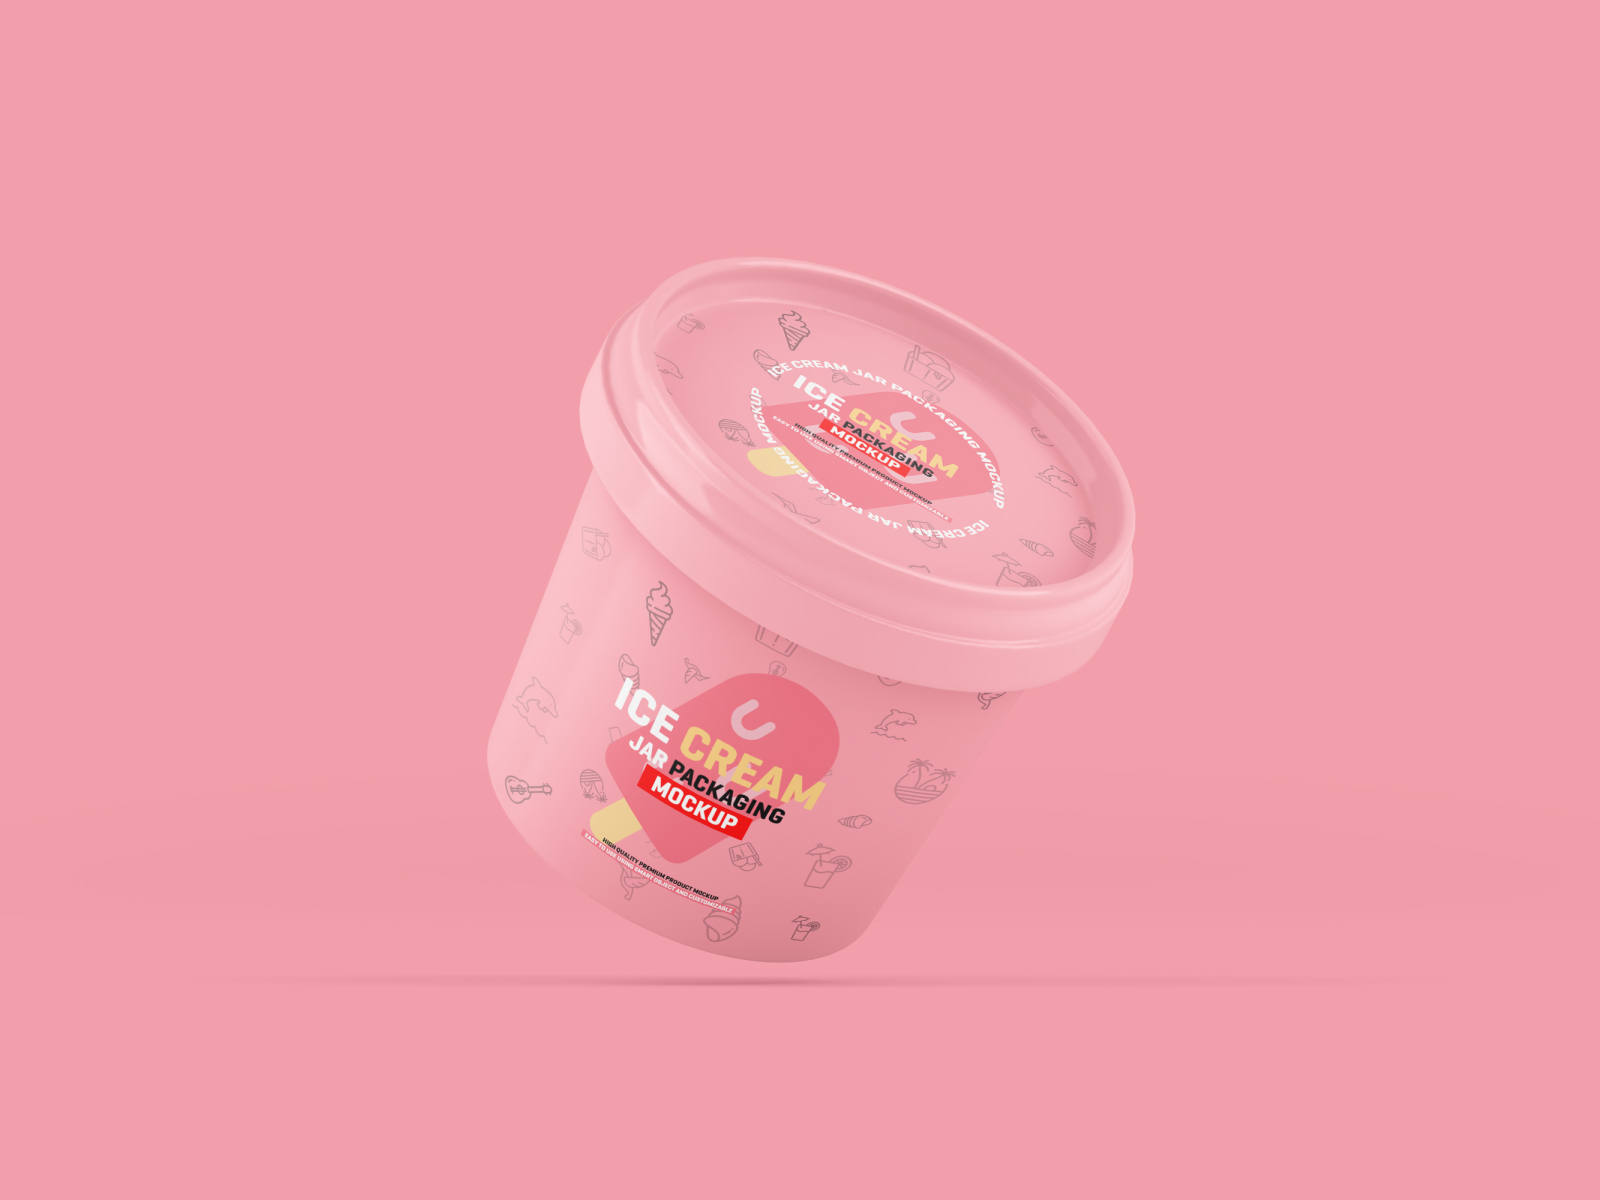 Download Ice Cream Jar Packaging Mockup by ToaSin Studio on Dribbble